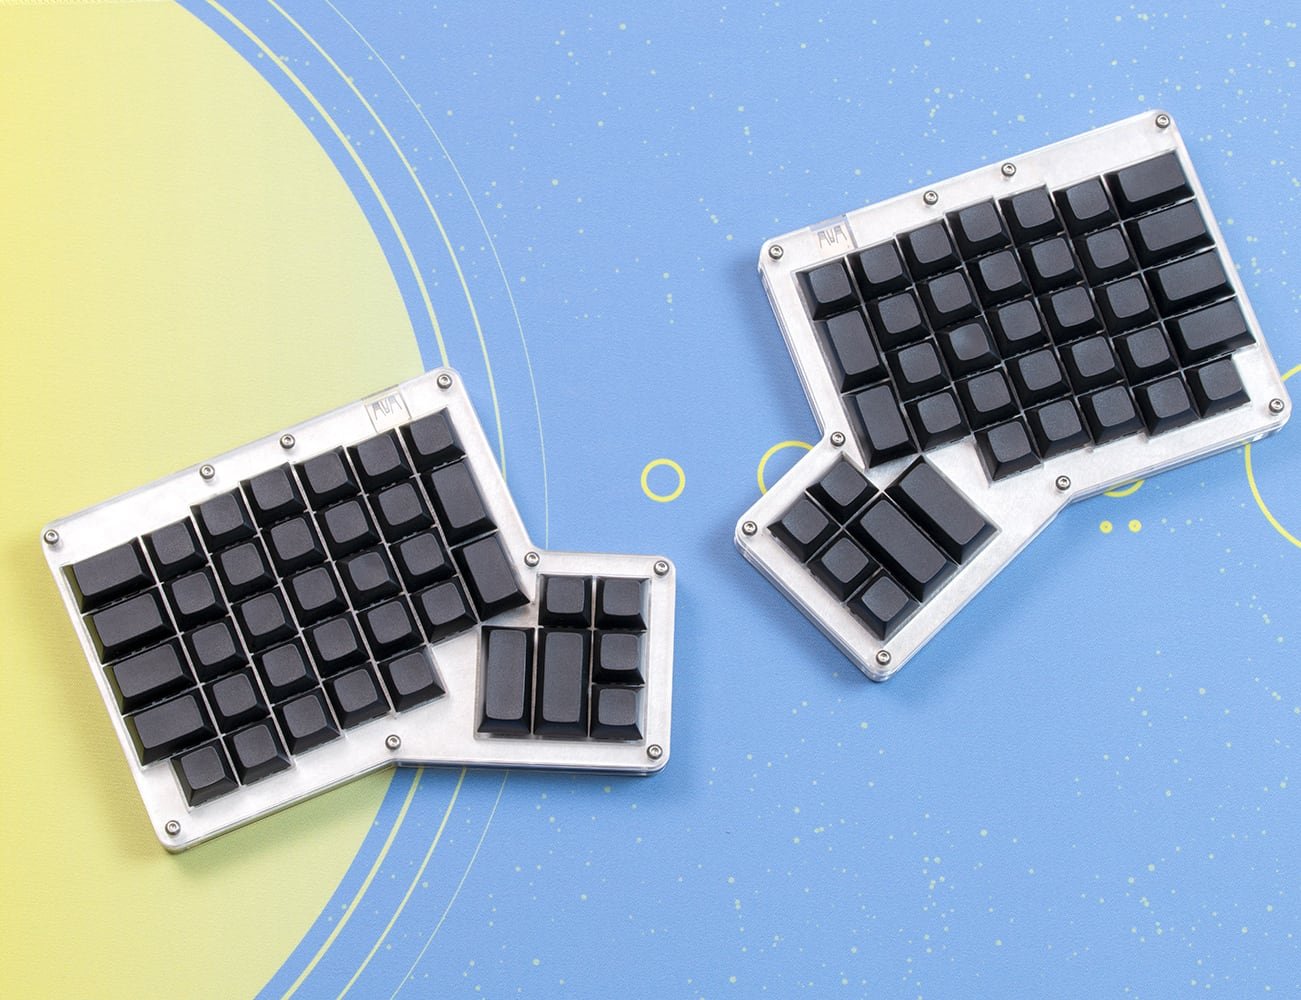 Hot Dox Complete Ergonomic Mechanical Keyboard Kit offers total customization